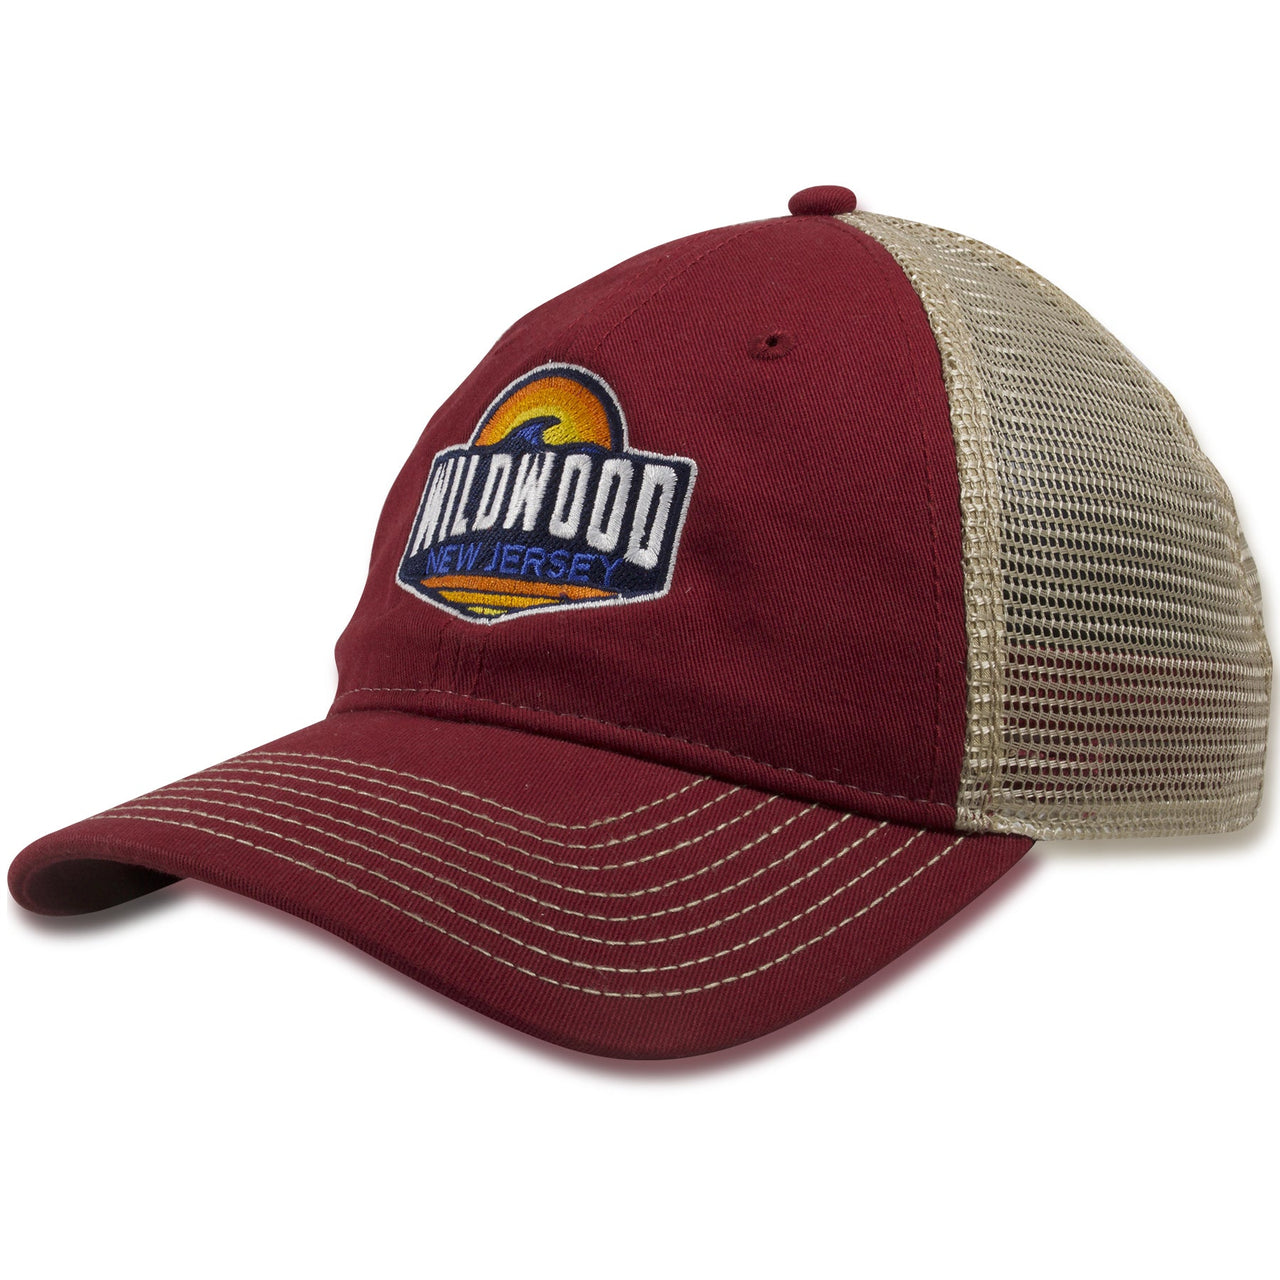 Wildwood New Jersey Sunset Wave Cardinal / Khaki Mesh-Back Trucker Hat